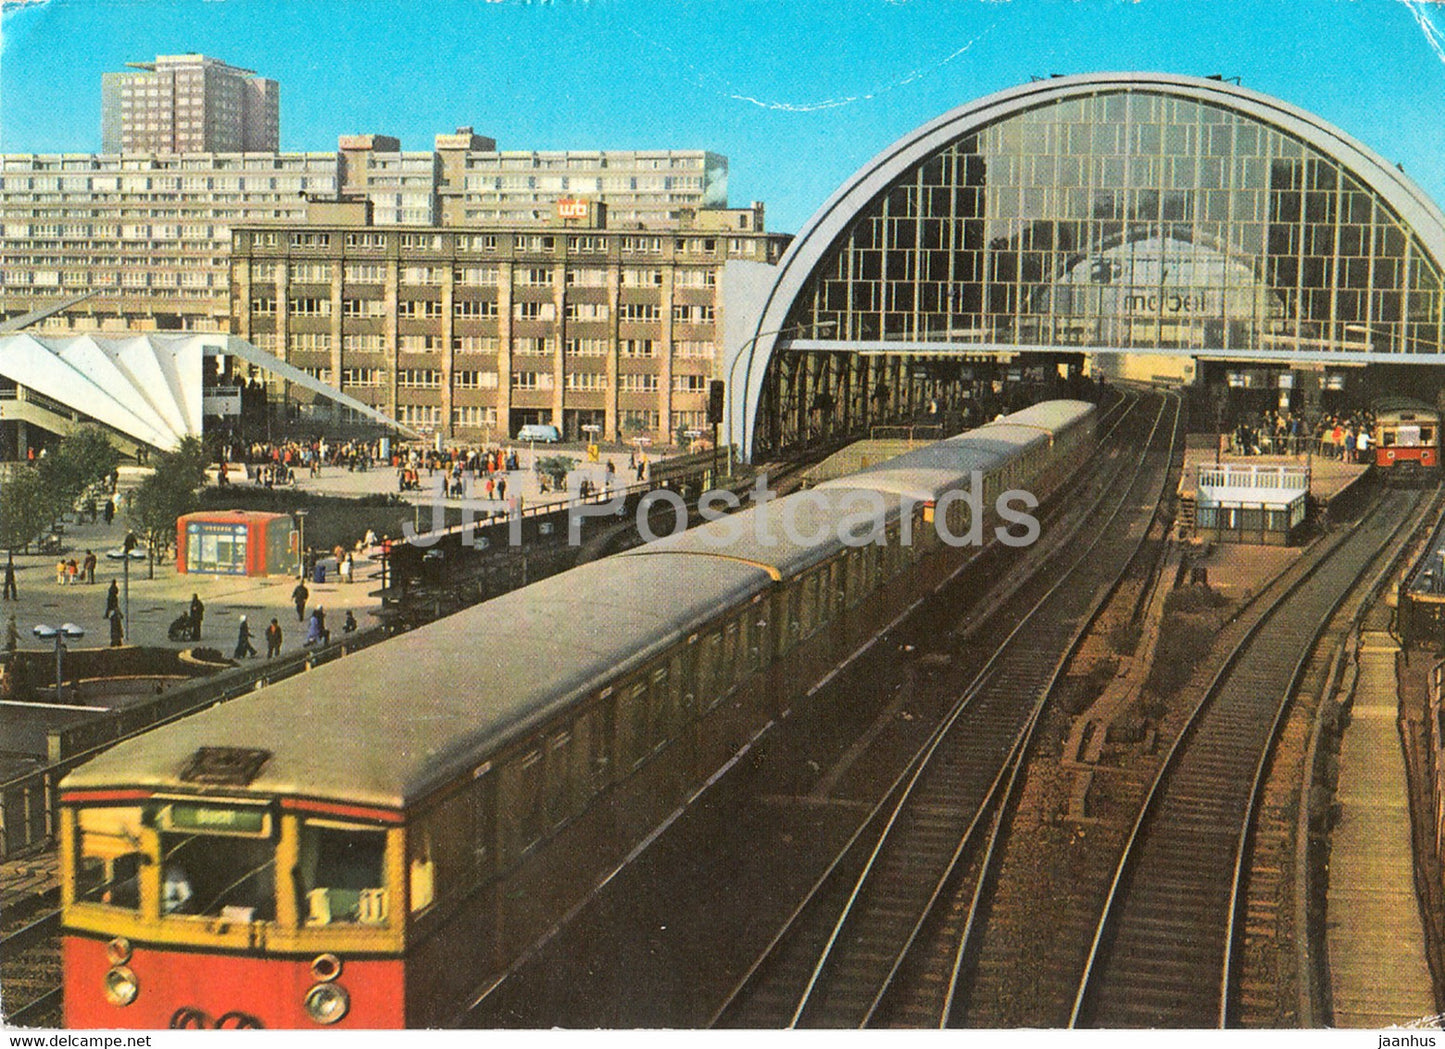 Berlin - S Bahnhof Alexanderplatz - metro - 1982 - Germany DDR - used - JH Postcards